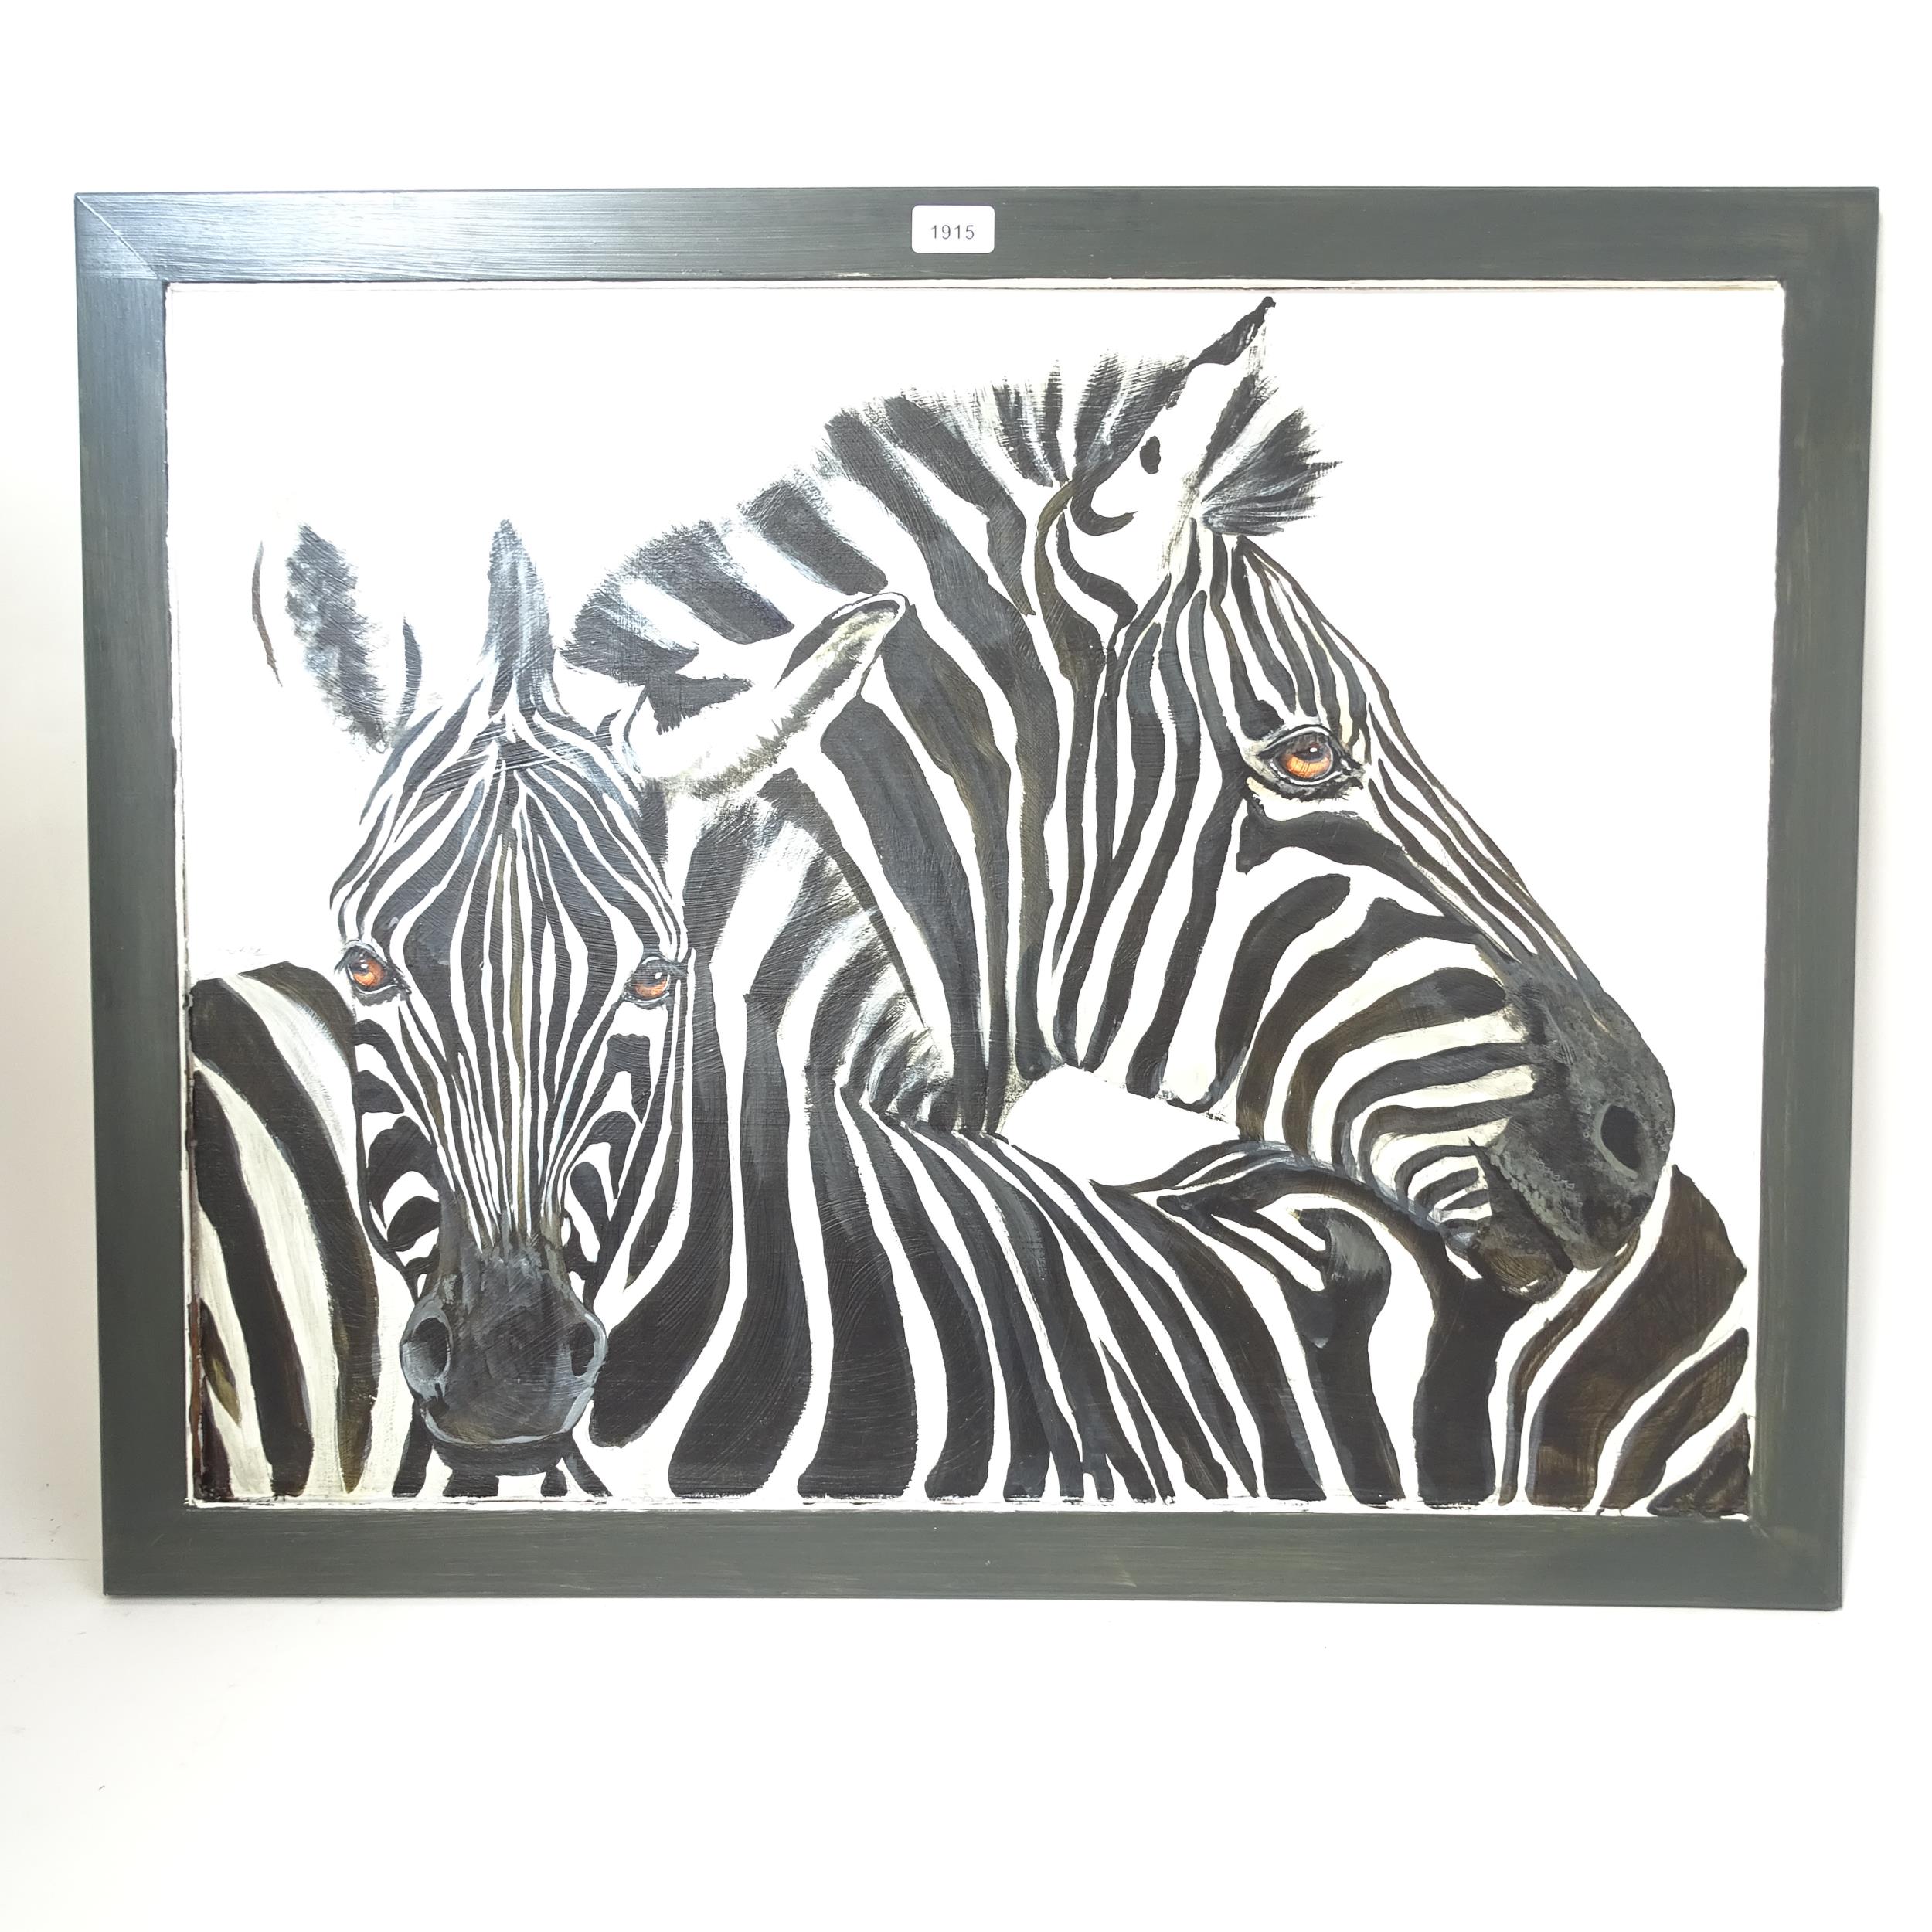 Clive Fredriksson, oil on board, "zebras", overall 68cm x 85cm, framed